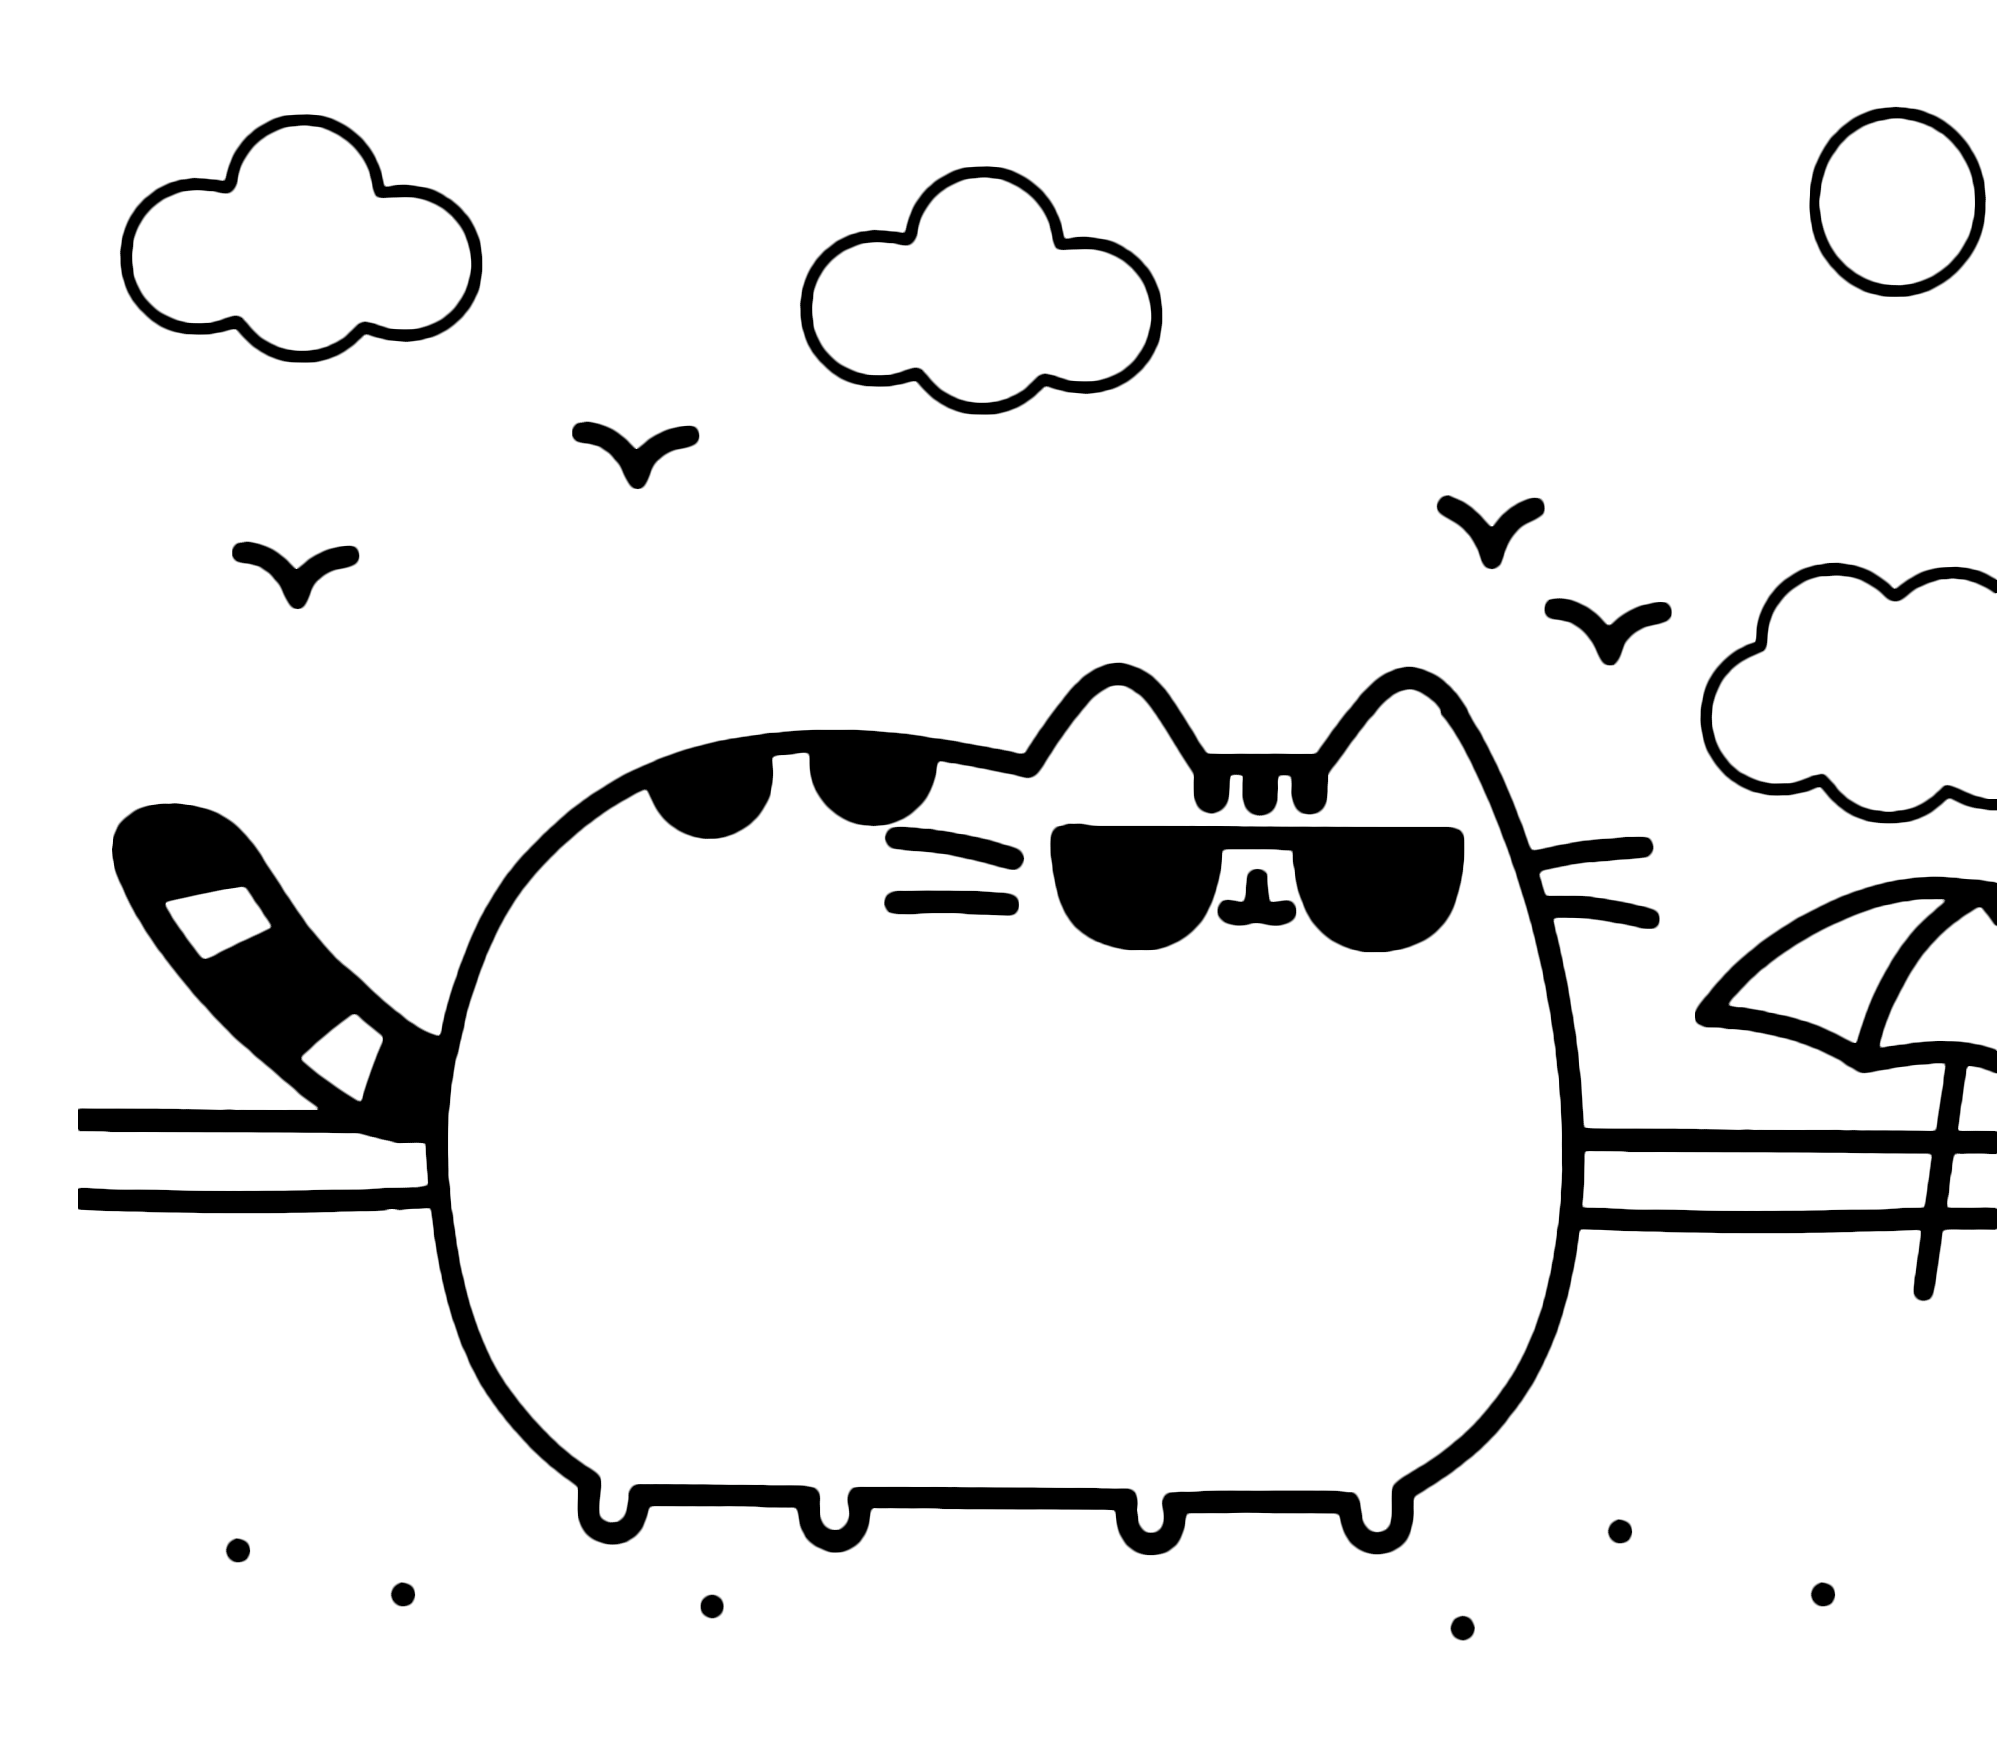 Pusheen Cat - Pusheen Cat in spiaggia con gli occhiali da sole